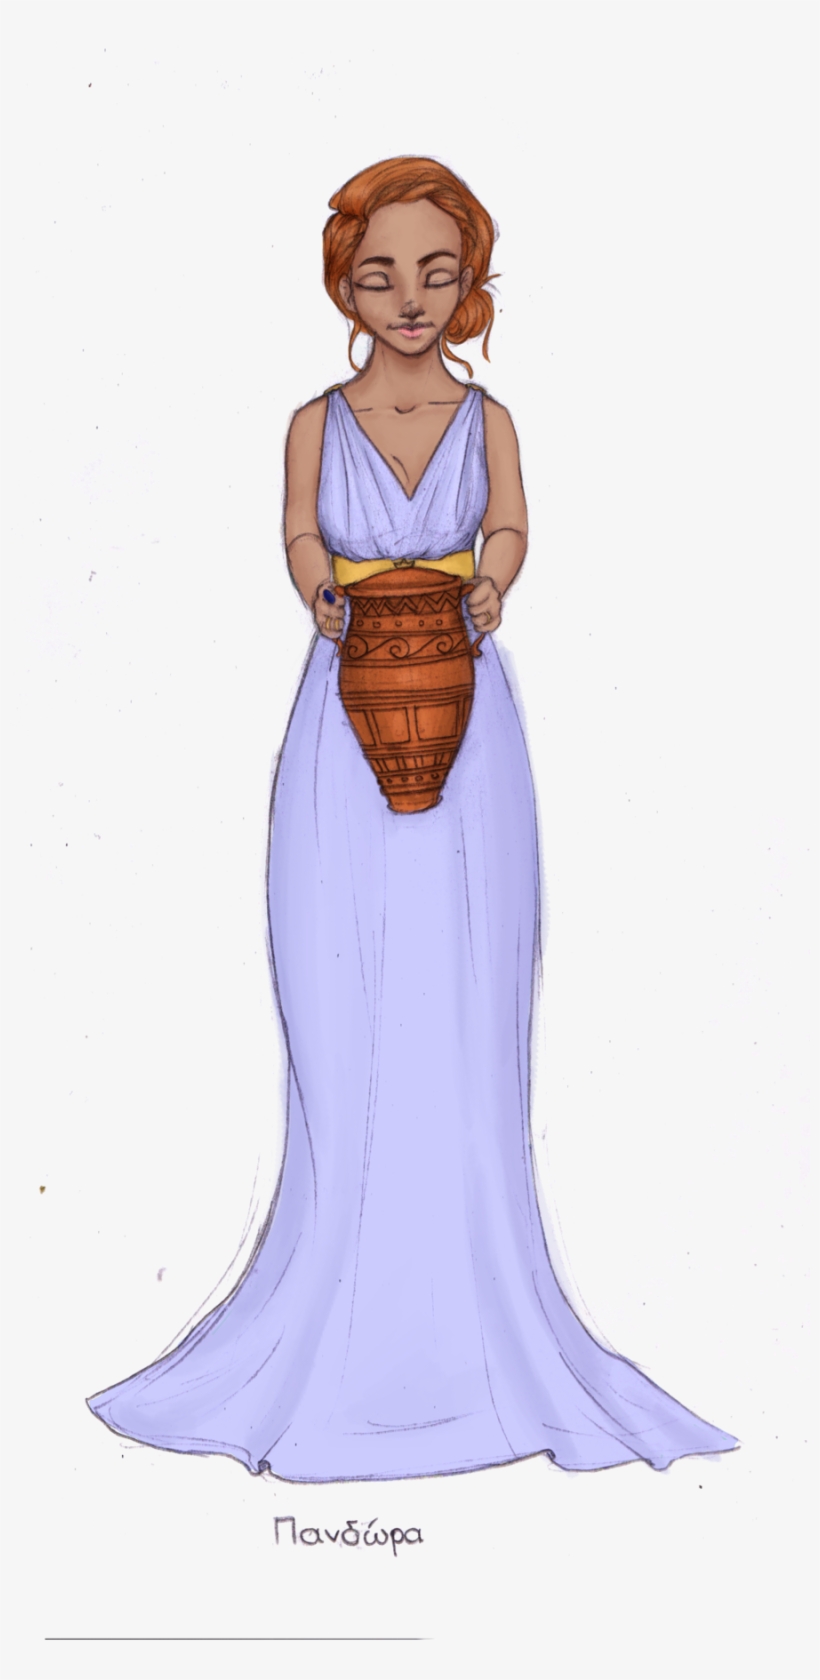 Pandora By Jadeariel - Pandora Greek Goddess Cartoon, transparent png #2821836